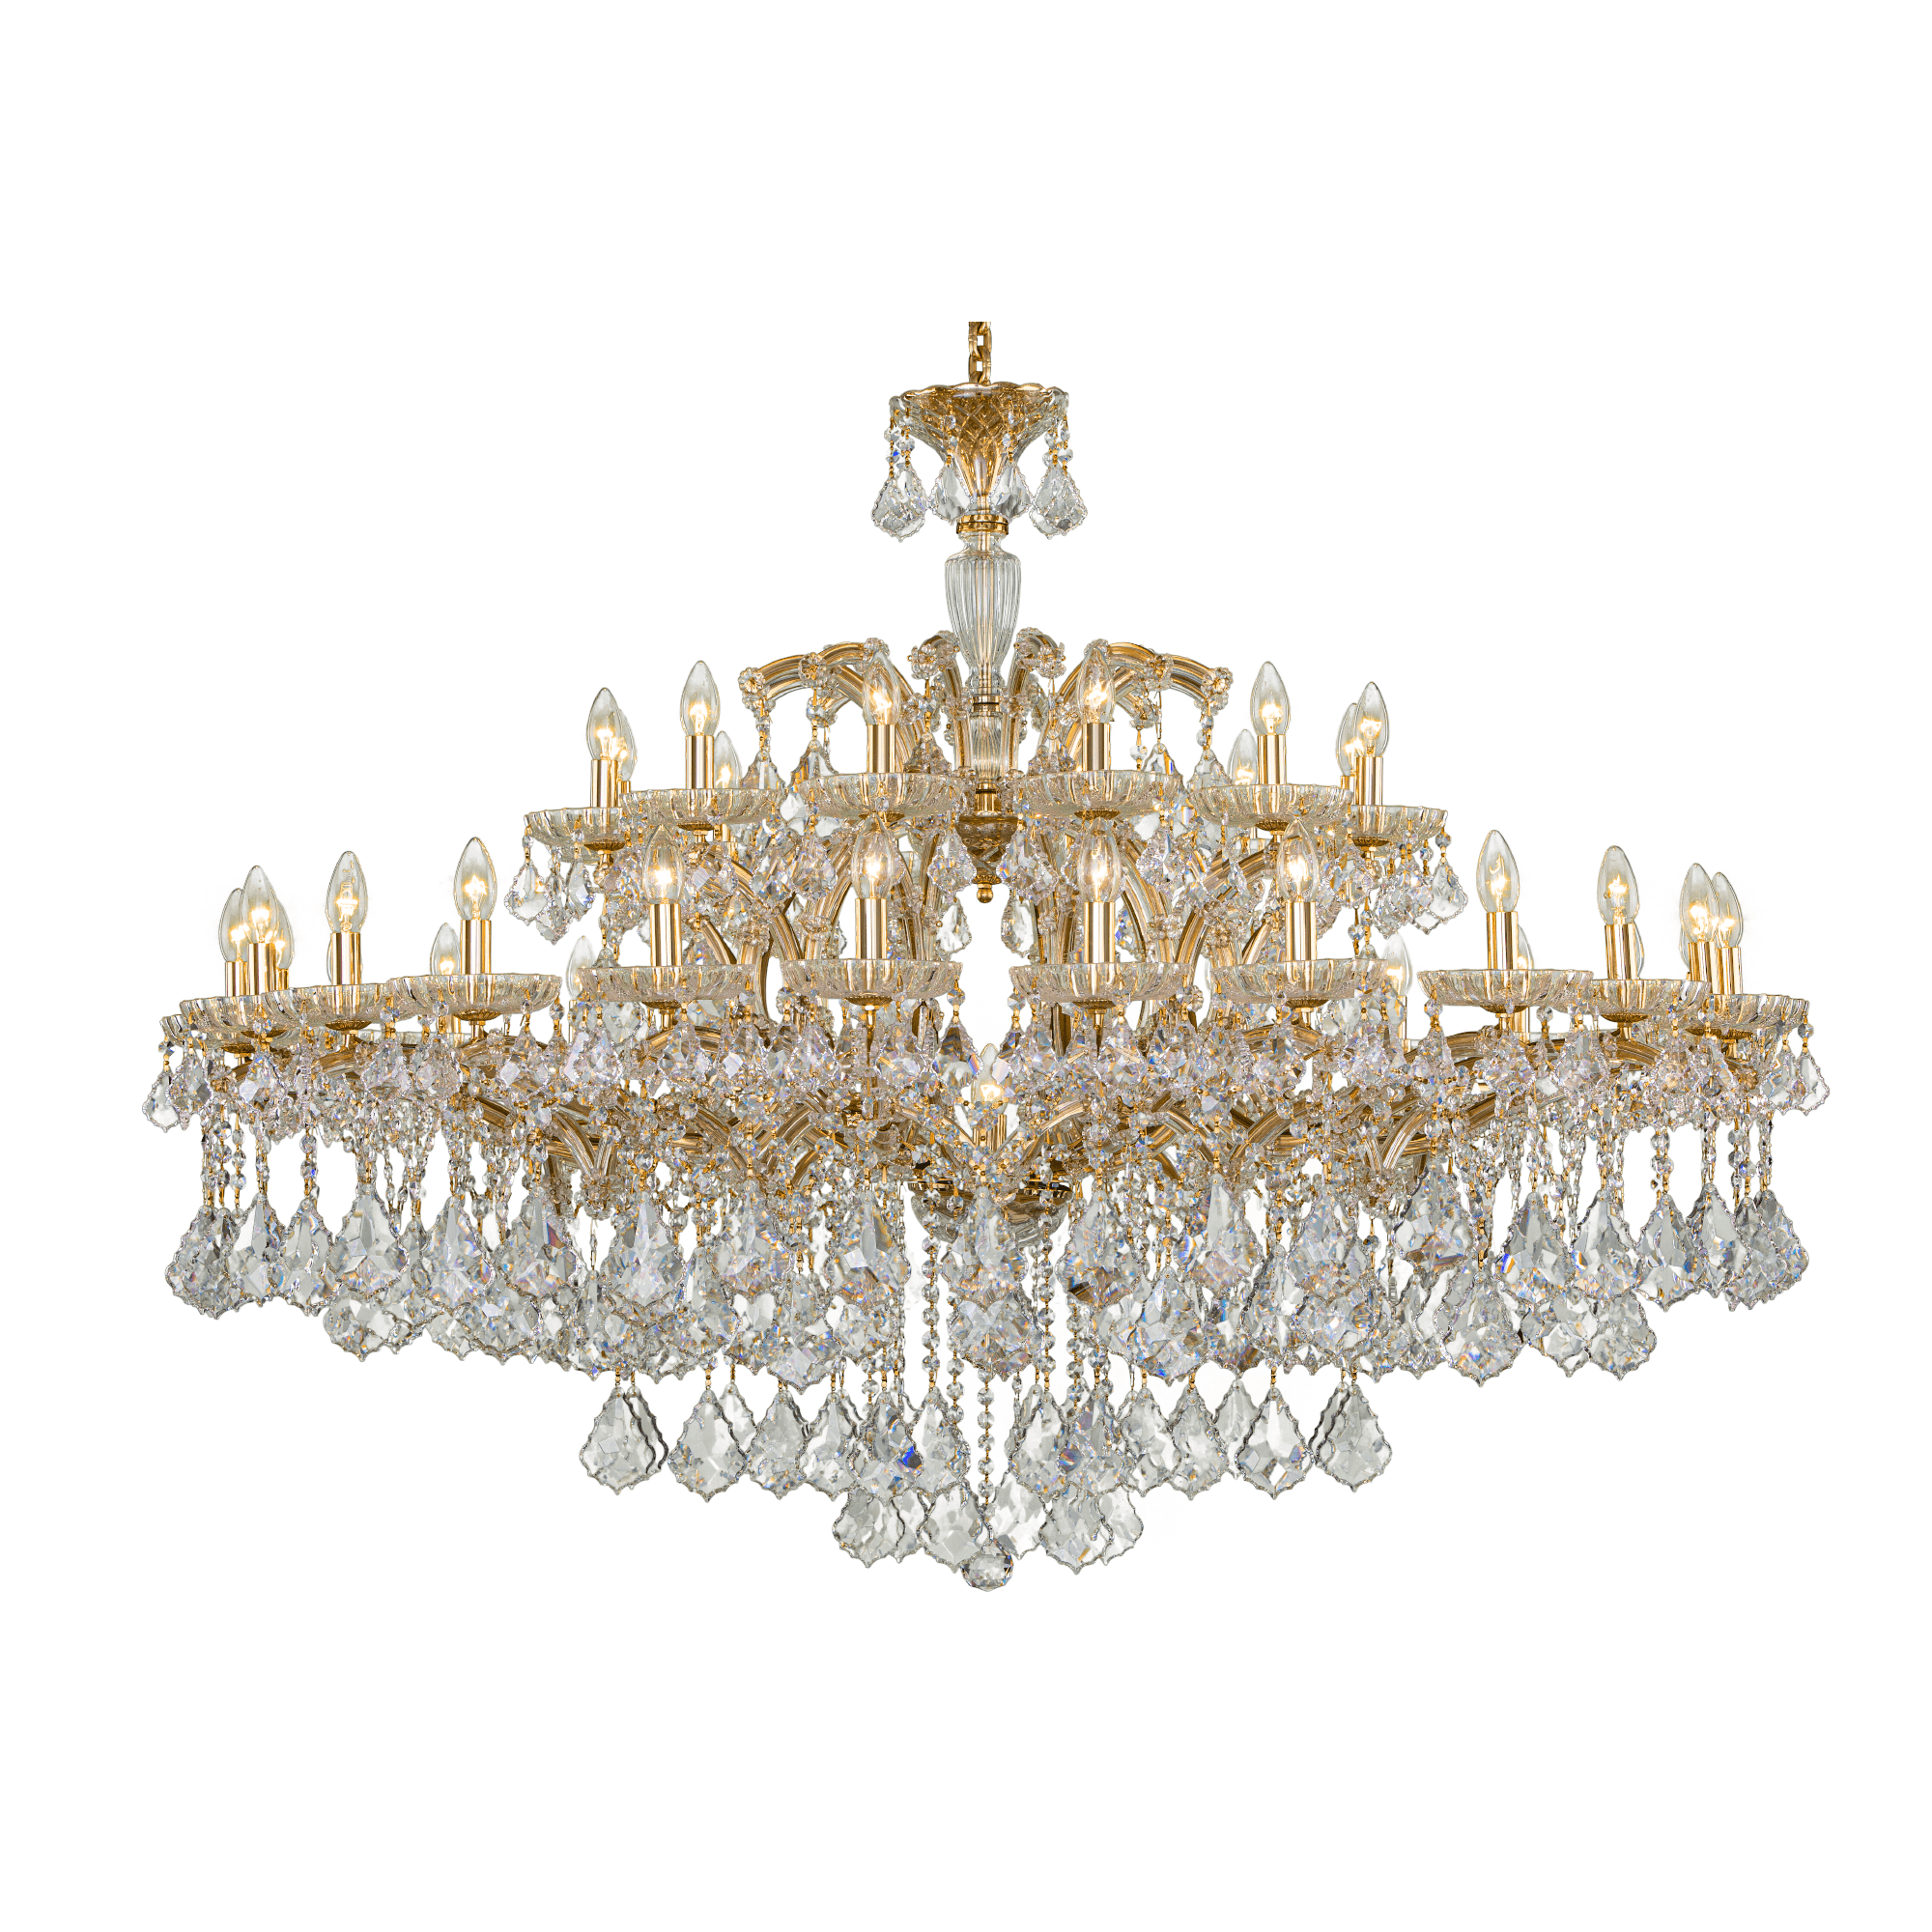 Asfour-Crystal-Lighting-Maria-Theresa-Collection-Maria-Theresa-Chandelier-37-Bulbs-Gold